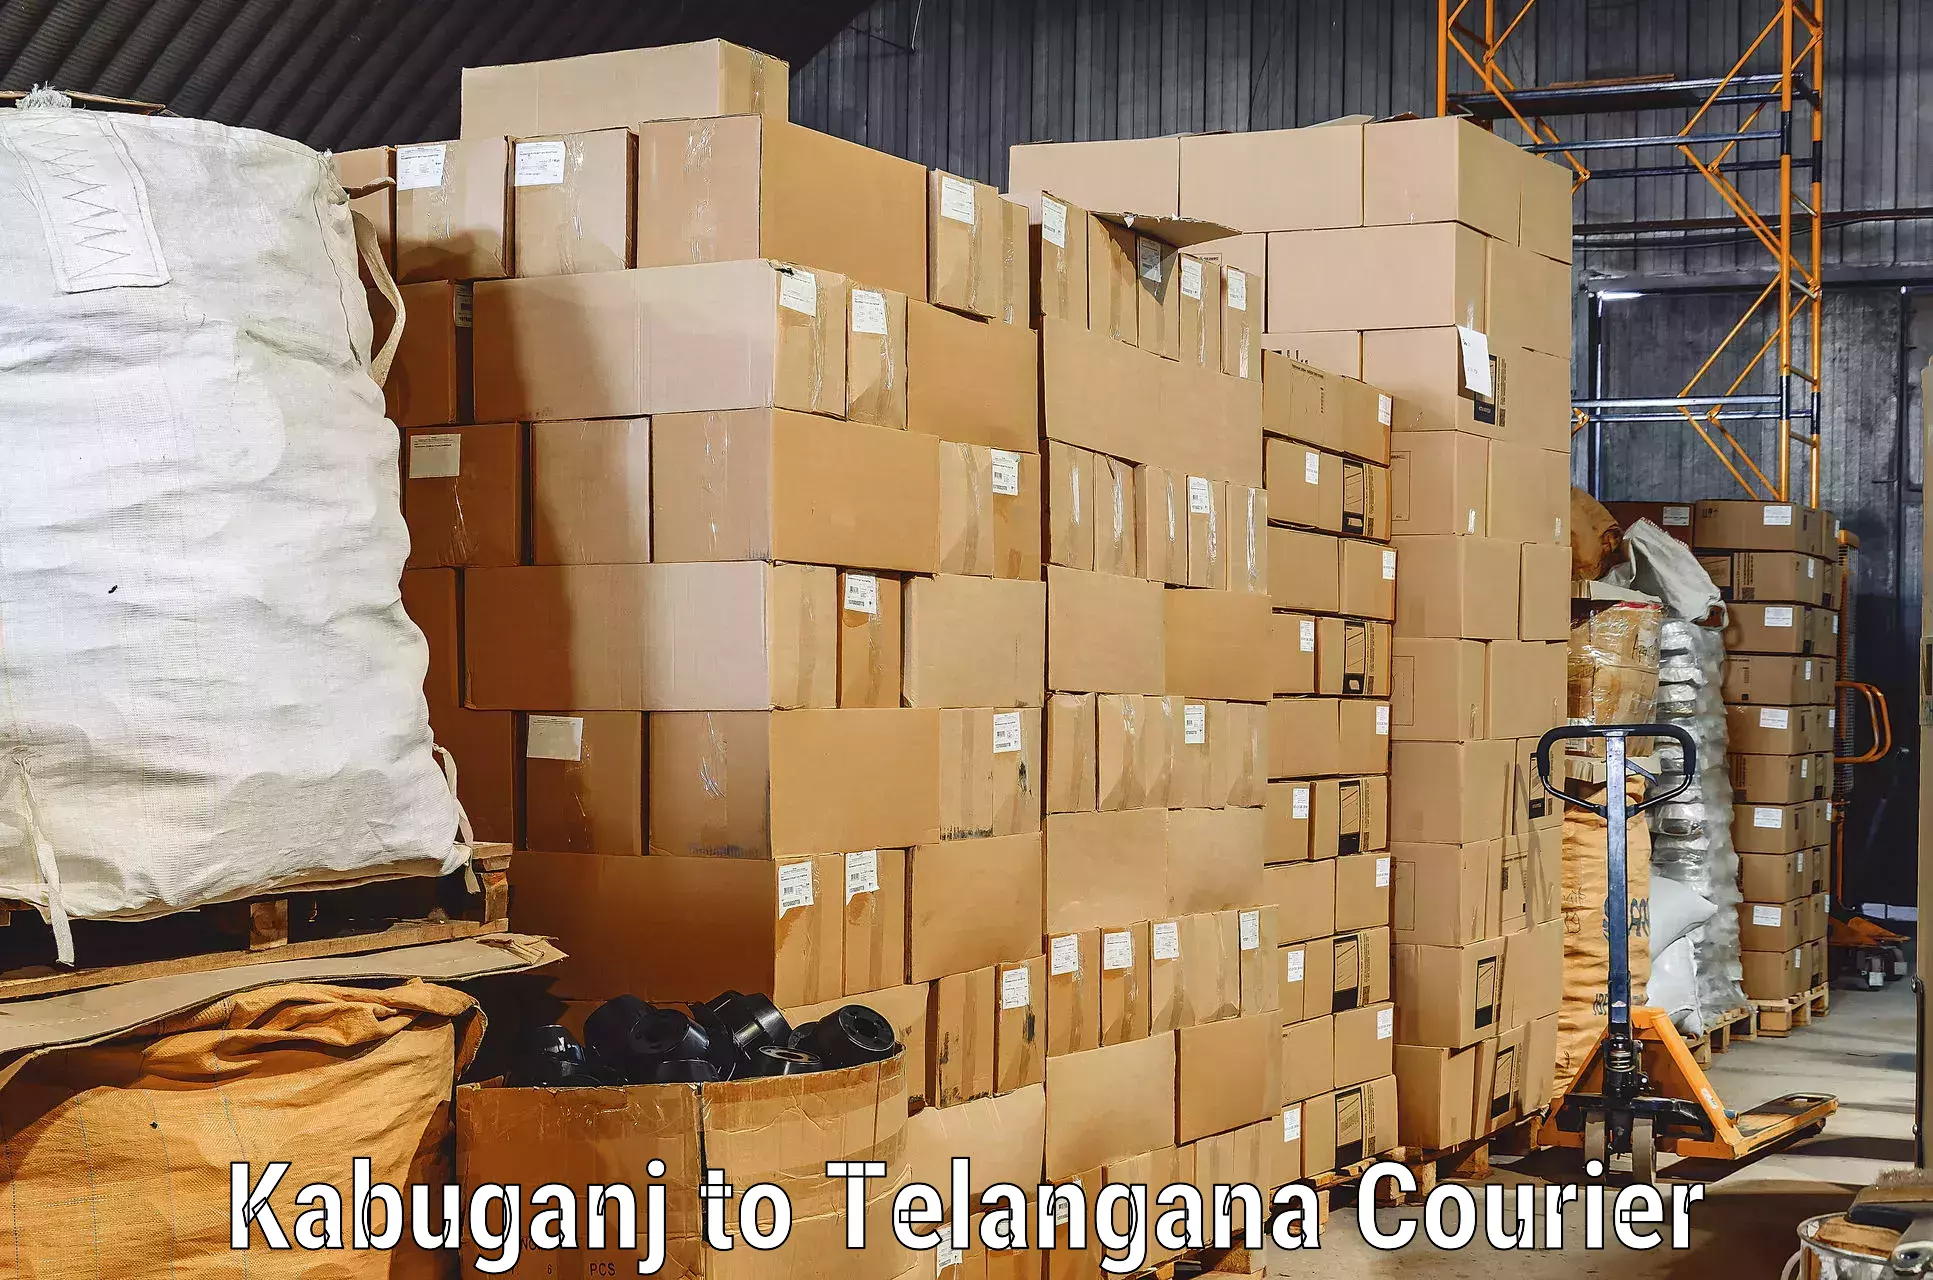 Professional home movers Kabuganj to Hanamkonda